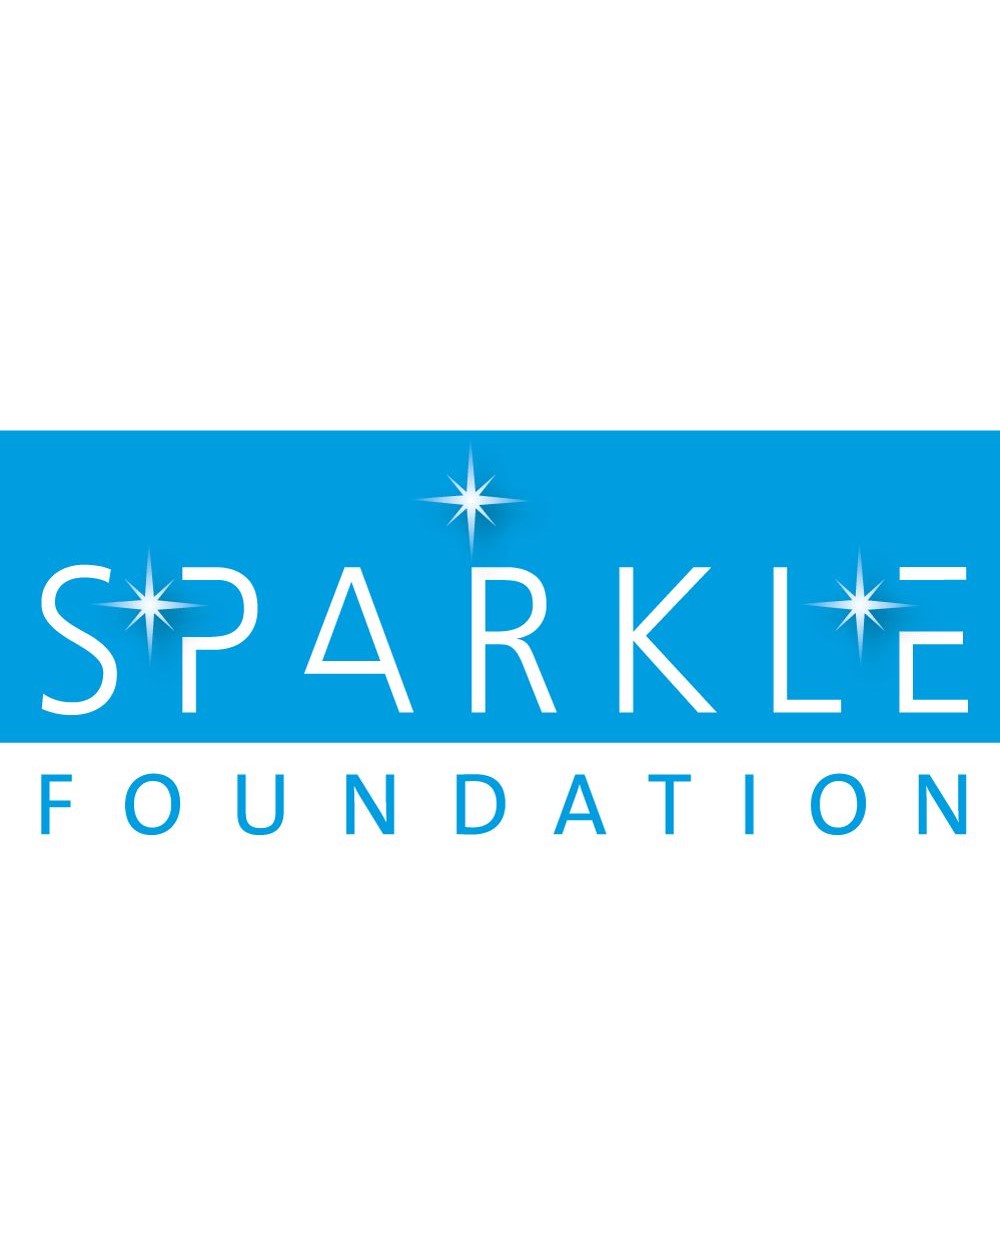 SPARKLE foundation